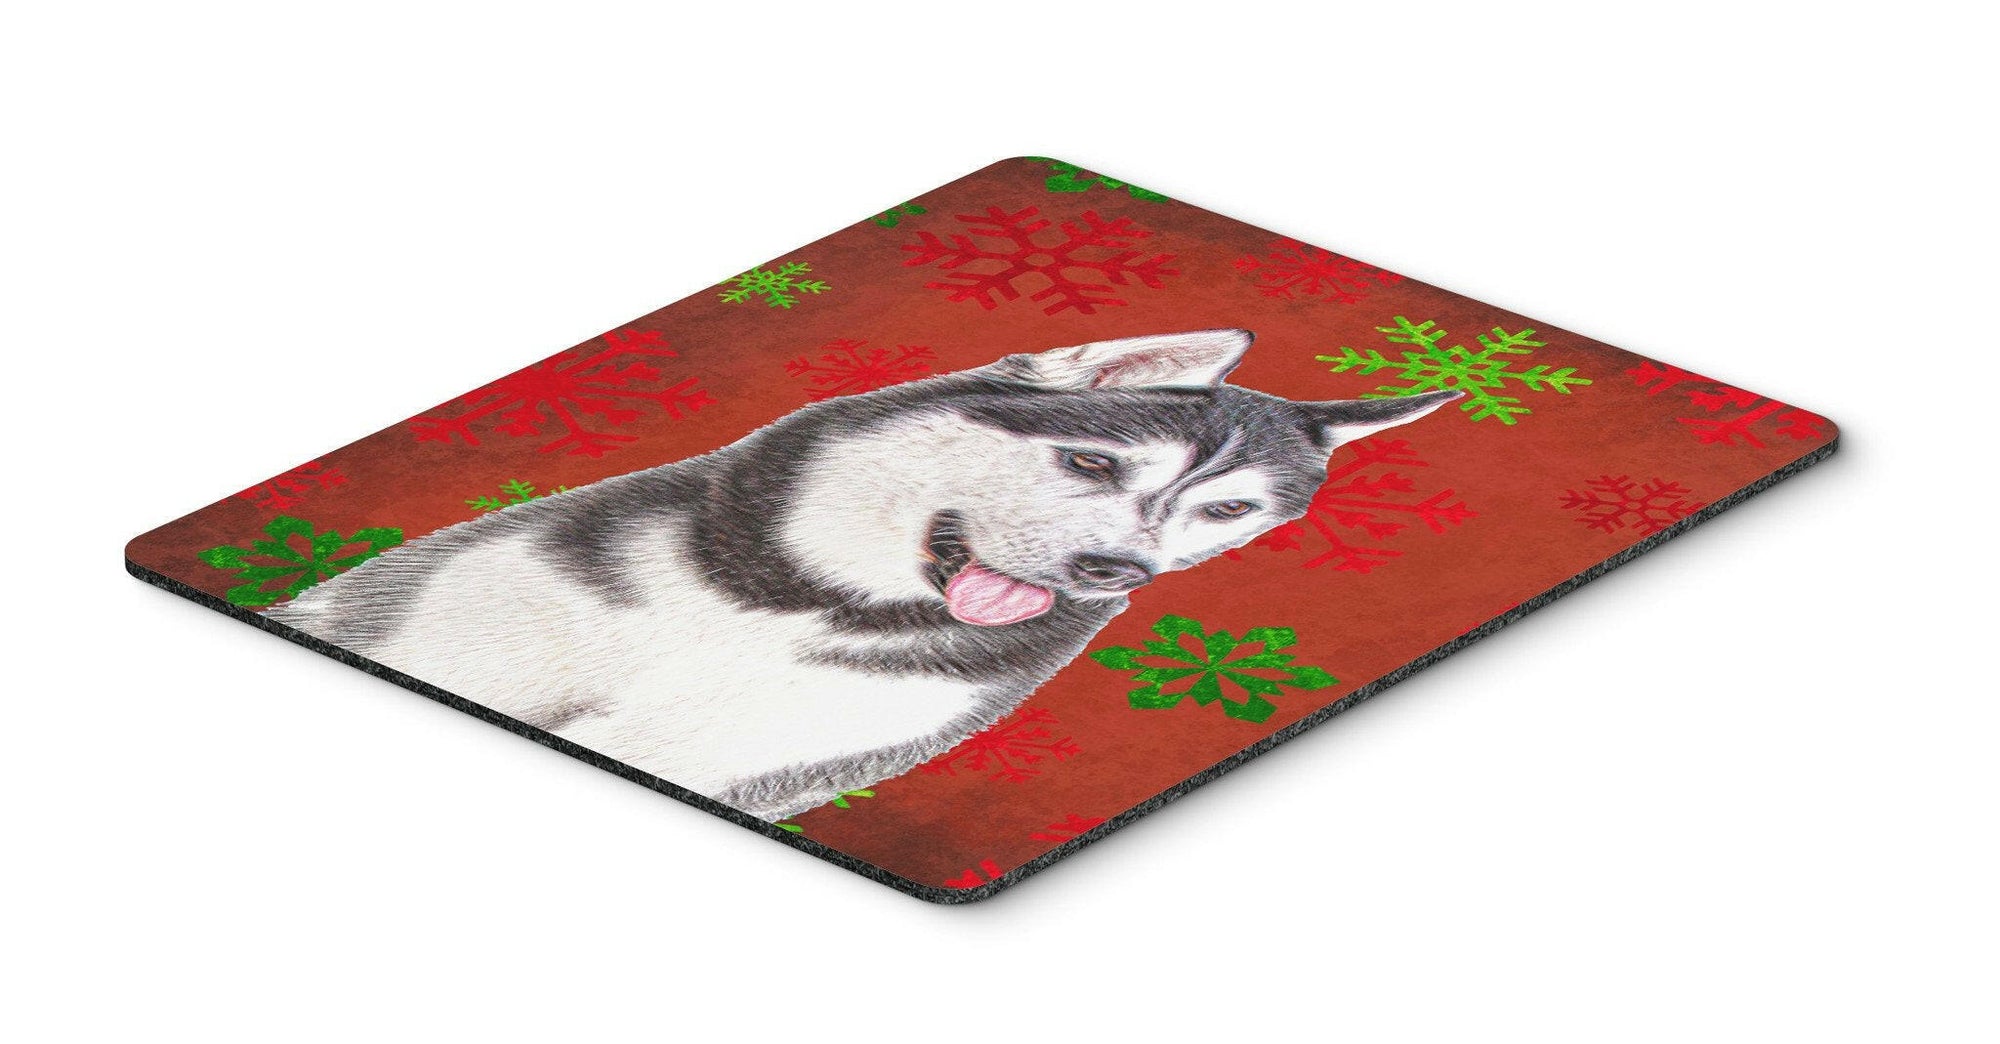 Red Snowflakes Holiday Christmas  Alaskan Malamute Mouse Pad, Hot Pad or Trivet KJ1182MP by Caroline's Treasures